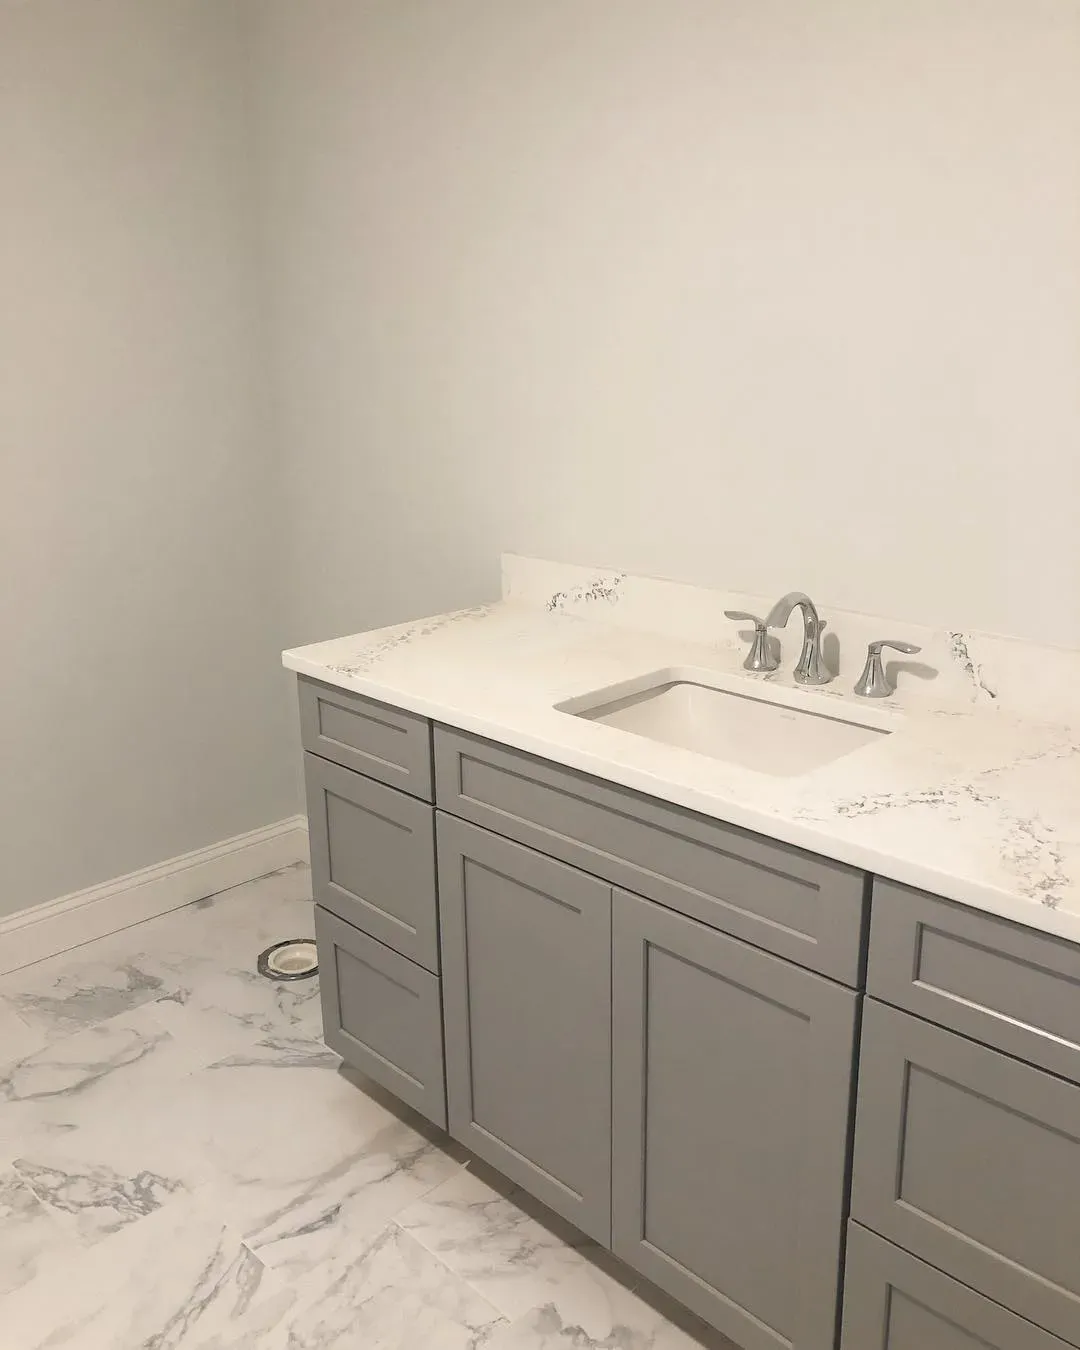 Benjamin Moore Paper White modern bathroom color